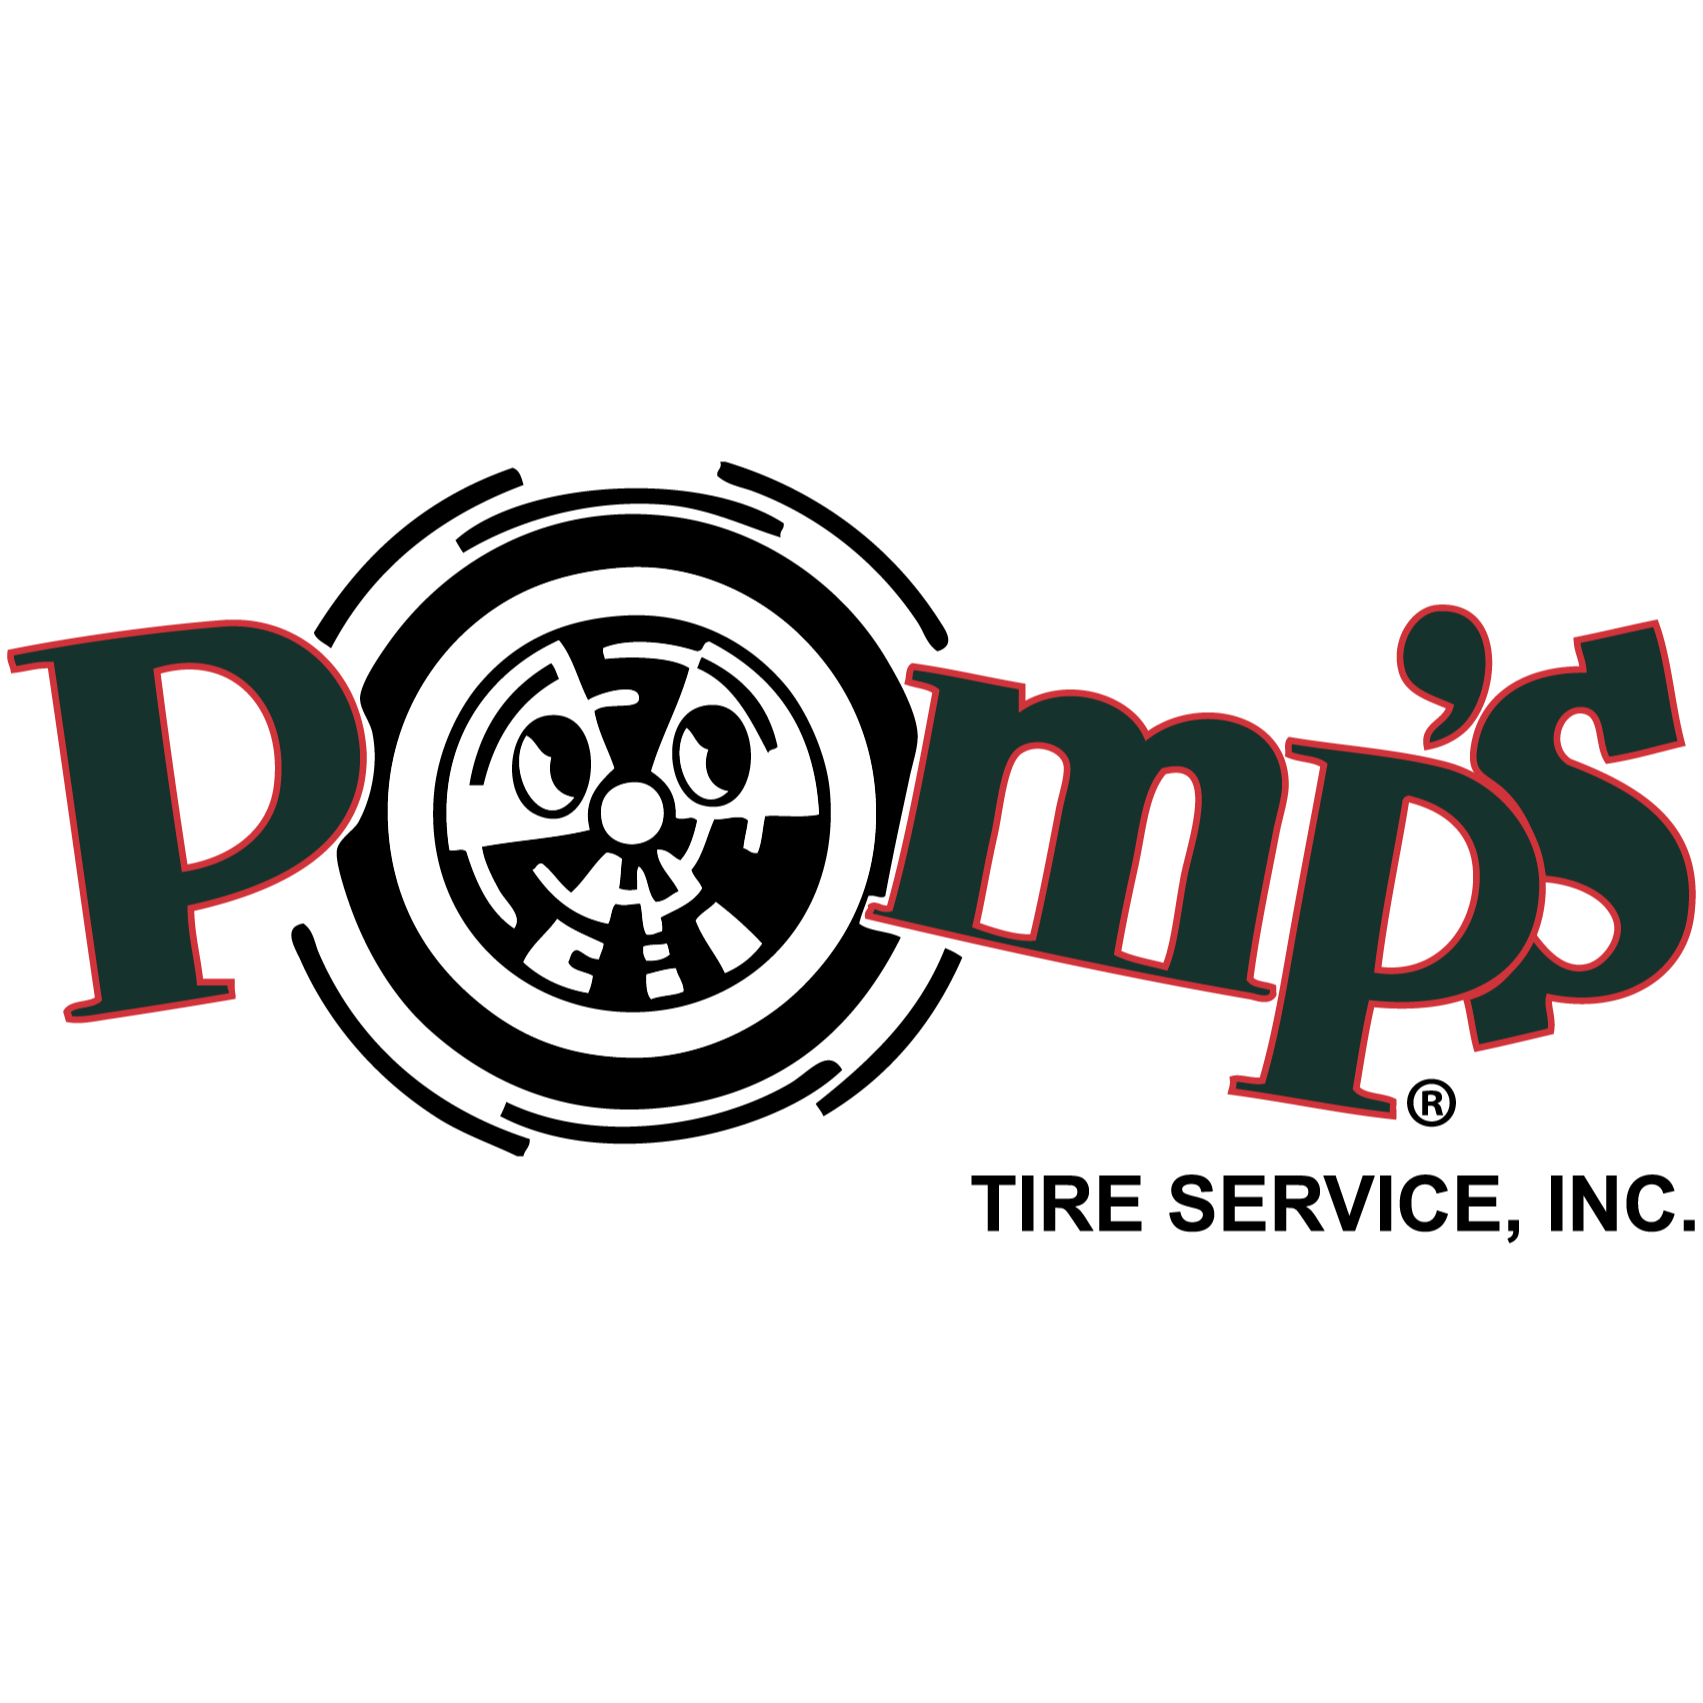 Pomp's Tire Service - Tacoma, WA 98421 - (253)272-9886 | ShowMeLocal.com